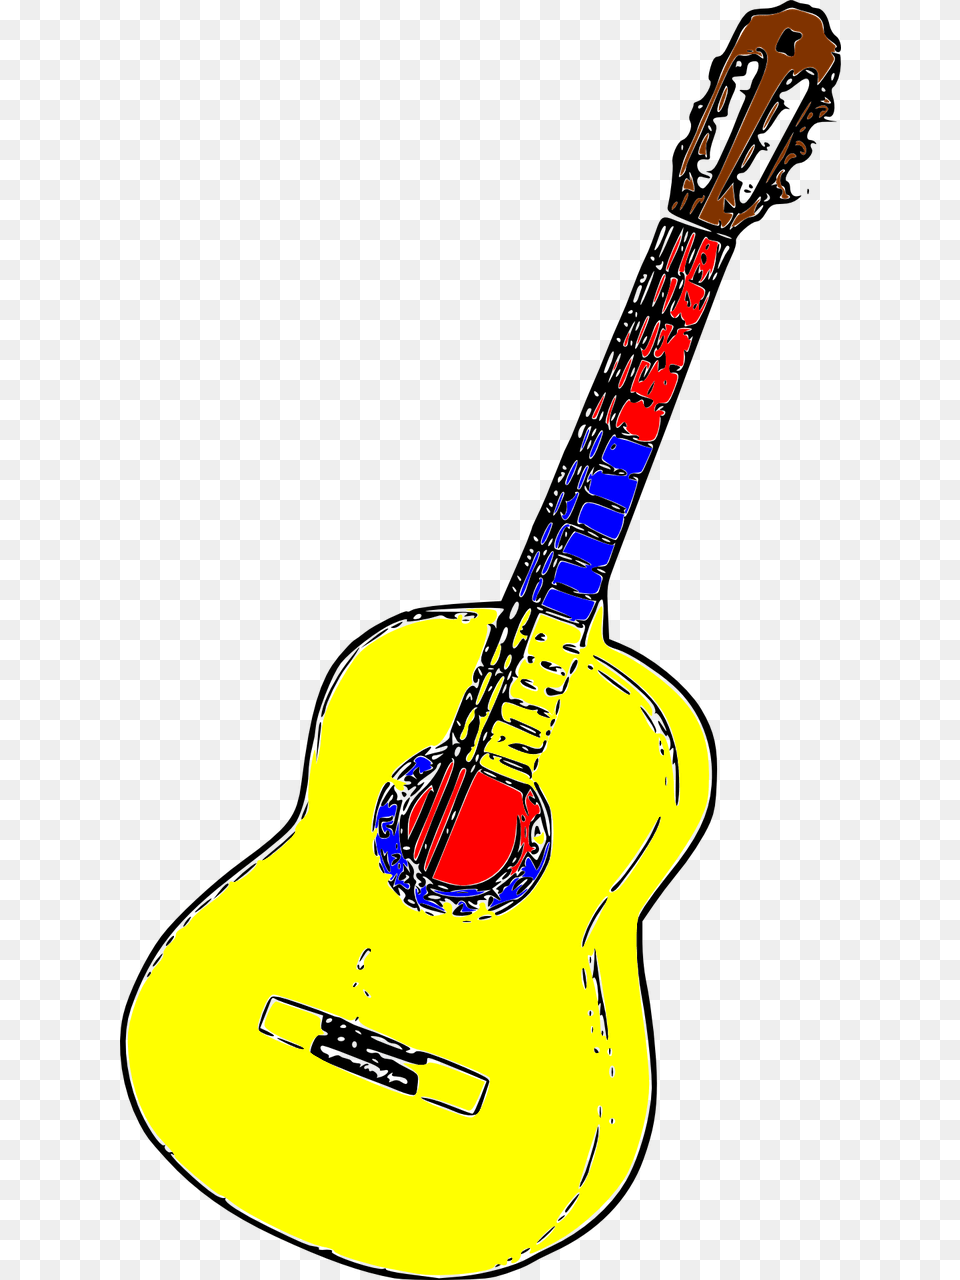 Acoustic Guitar, Musical Instrument, Bass Guitar, Smoke Pipe Png